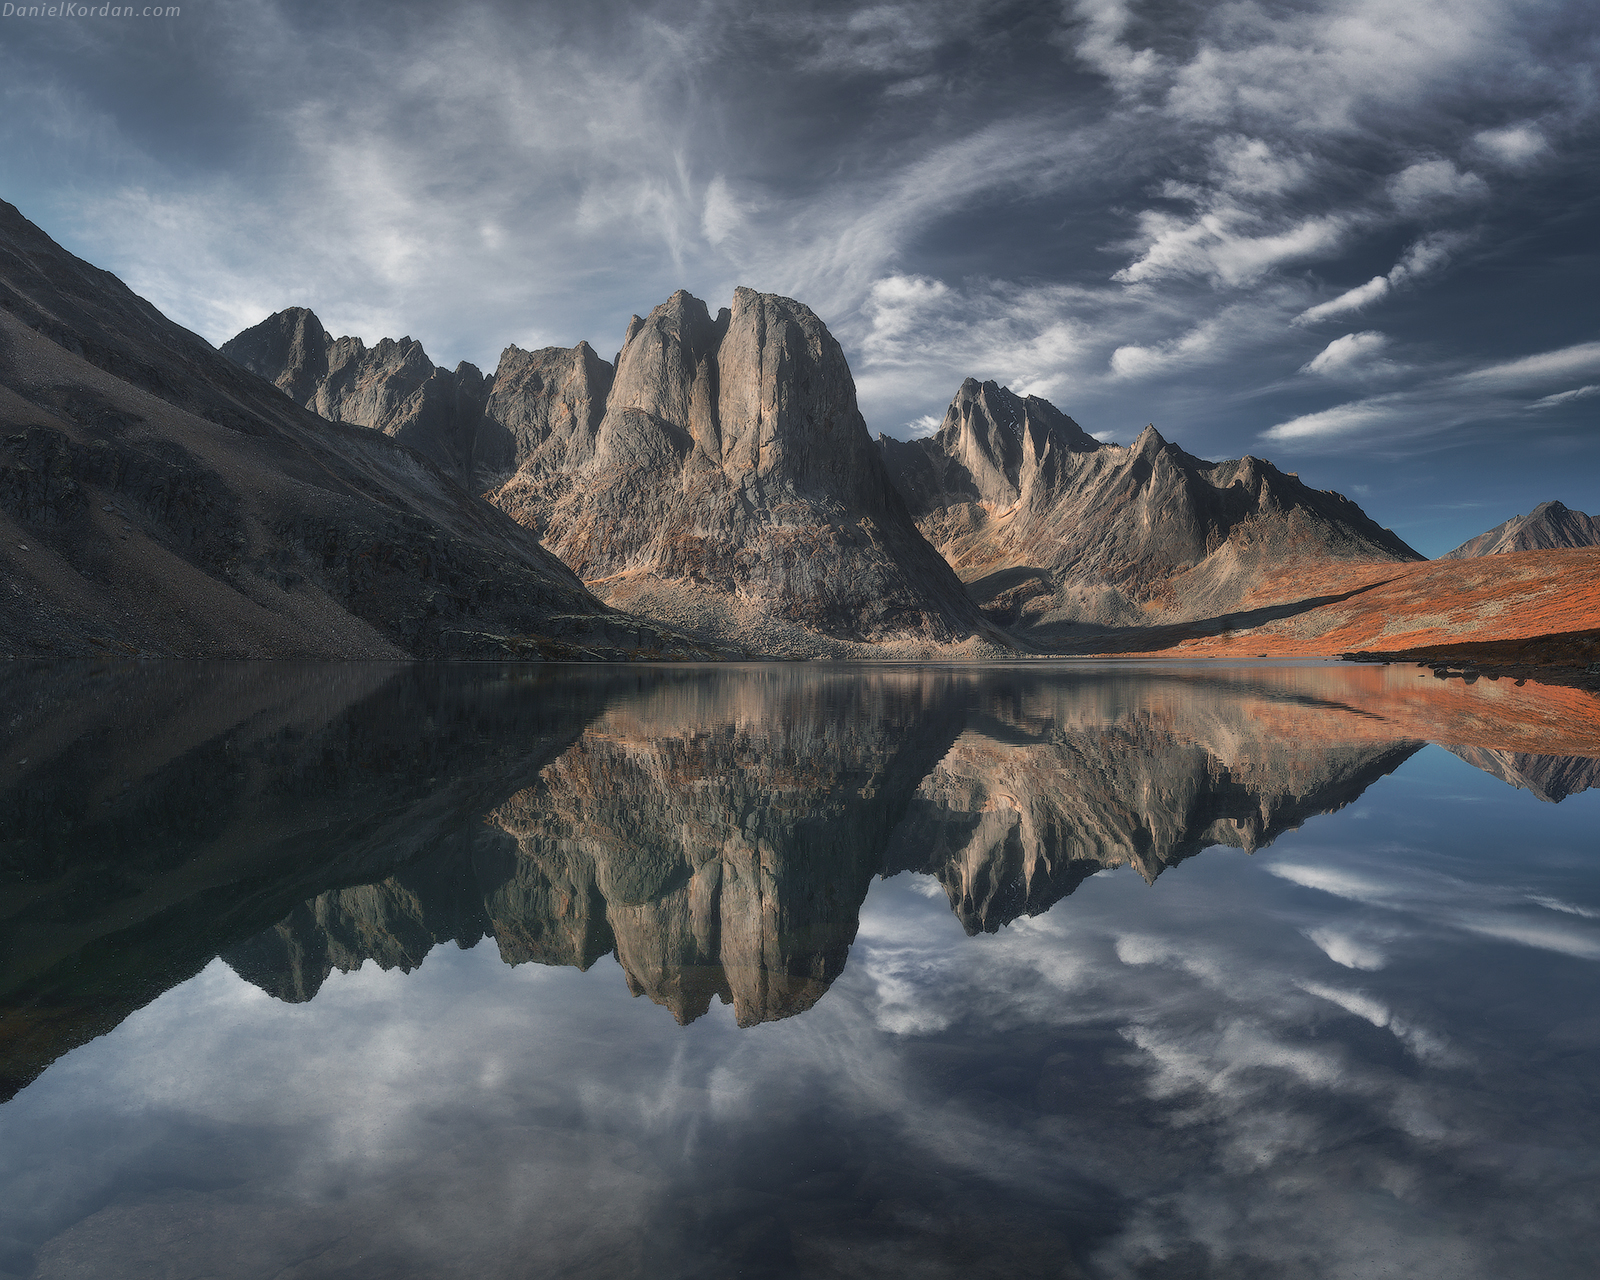 General 1600x1280 Daniel Kordan landscape Yukon mountains water sky clouds reflection nature